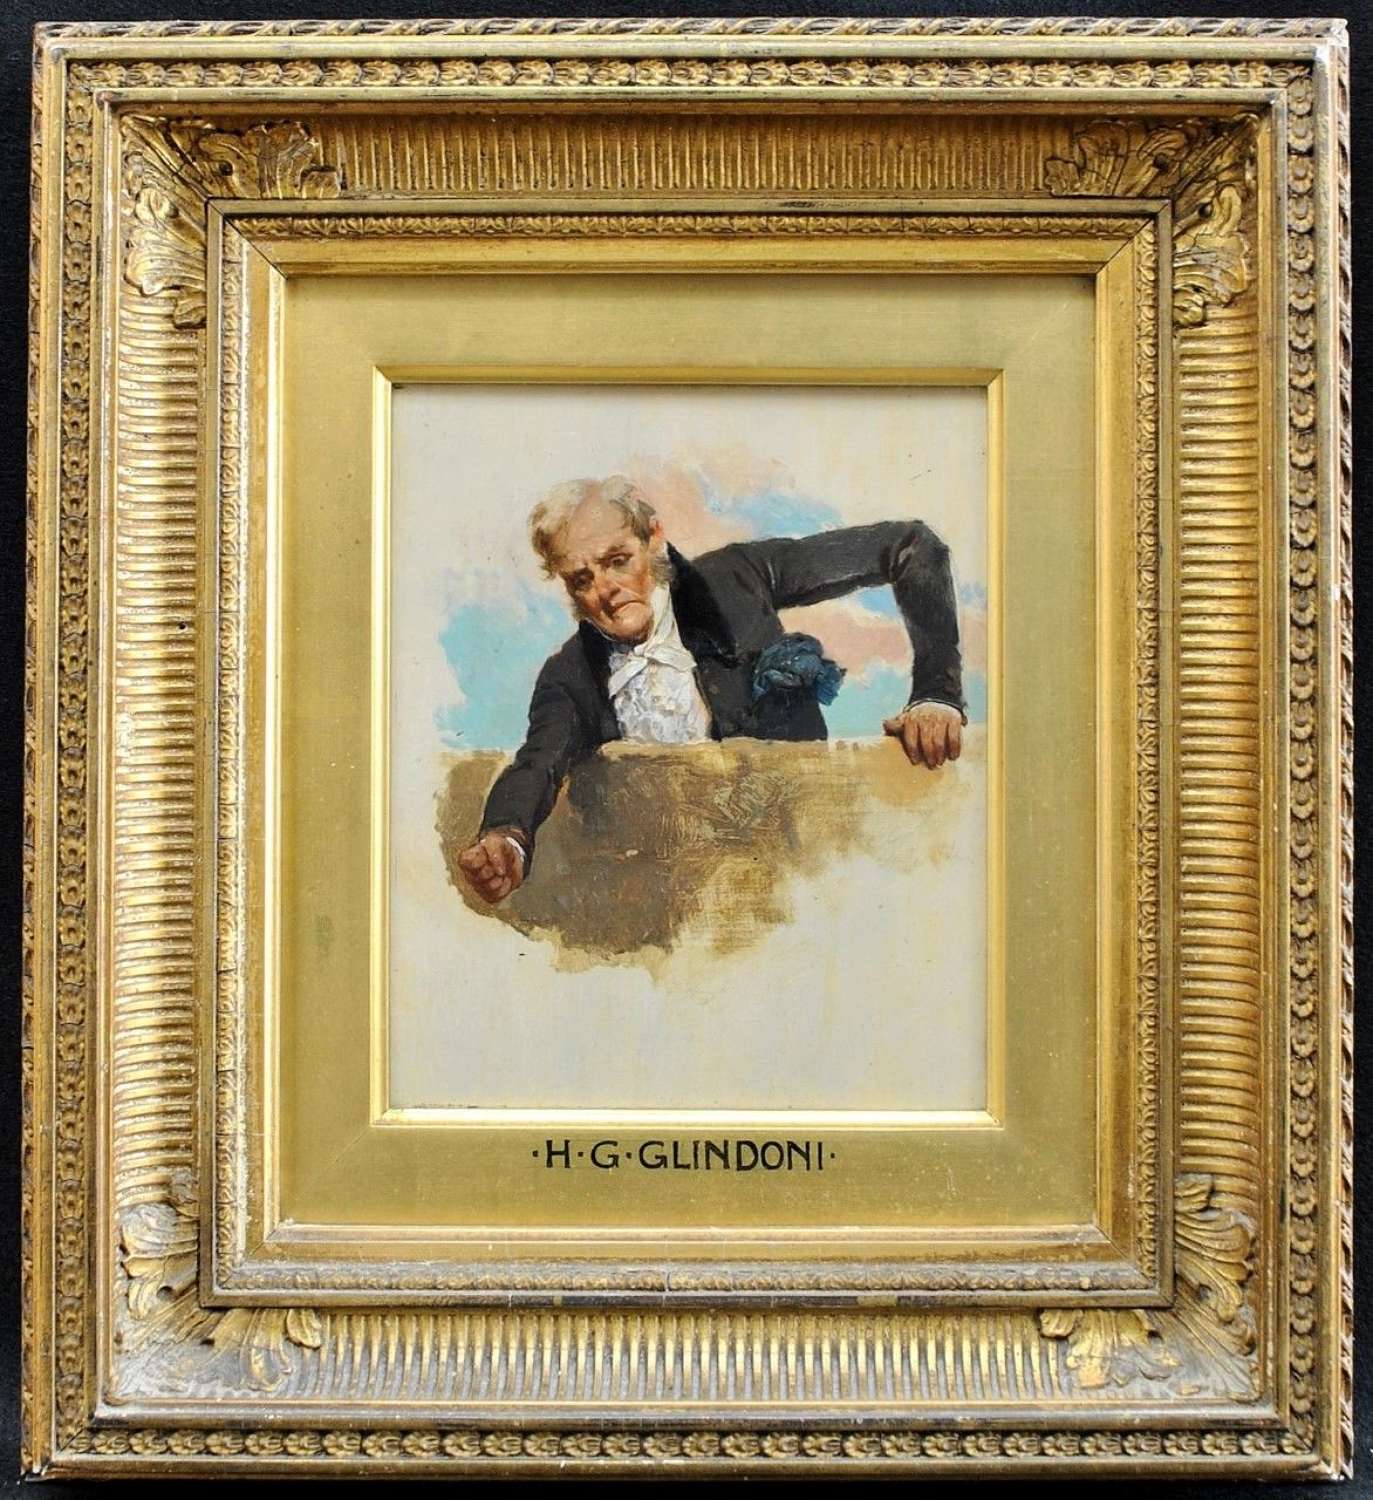 HENRY GILLARD GLINDONI (1852-1904) PORTRAIT OF A GENTLEMA PAINTING